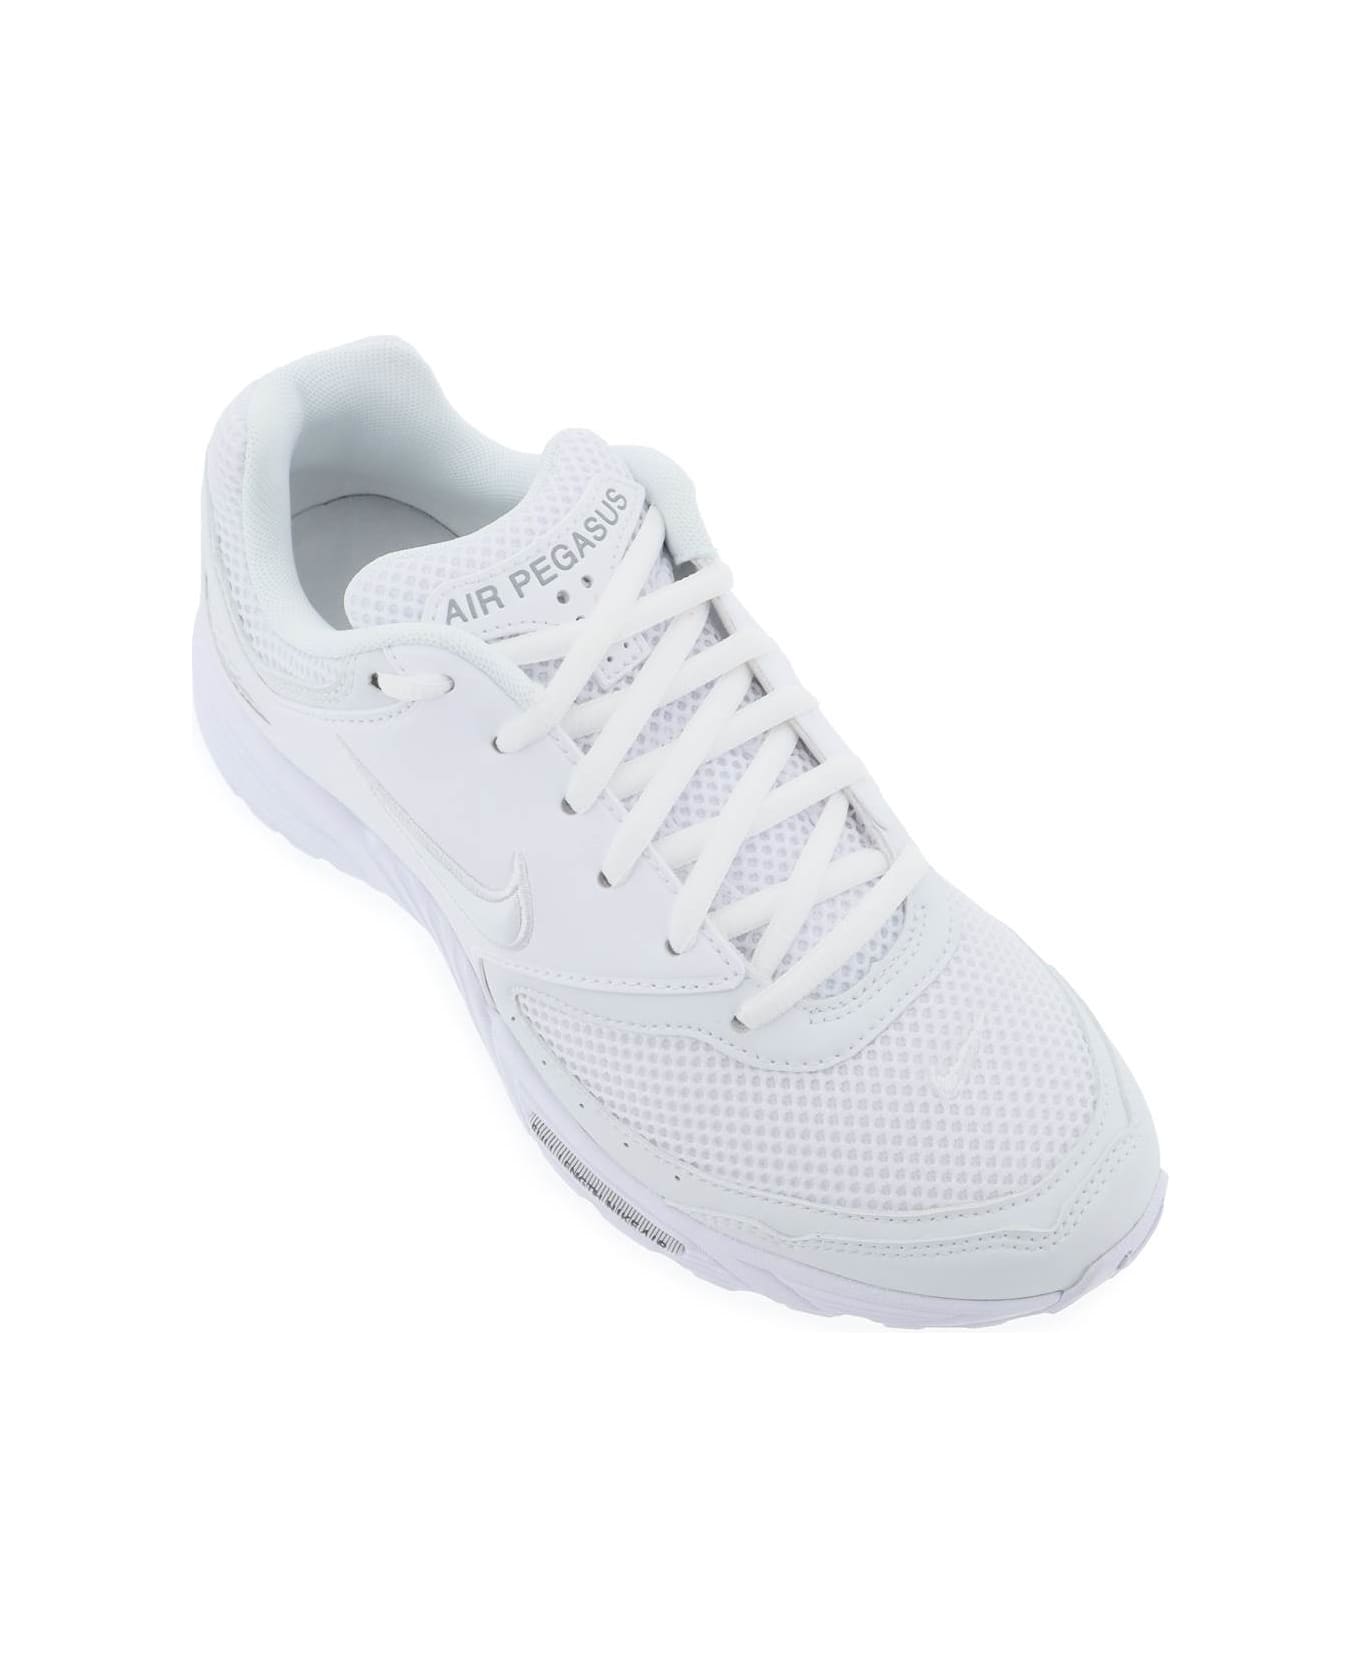 Comme Des Garçons Homme Plus Air Pegasus 2005 Sp Sneakers X Nike - WHITE (White)